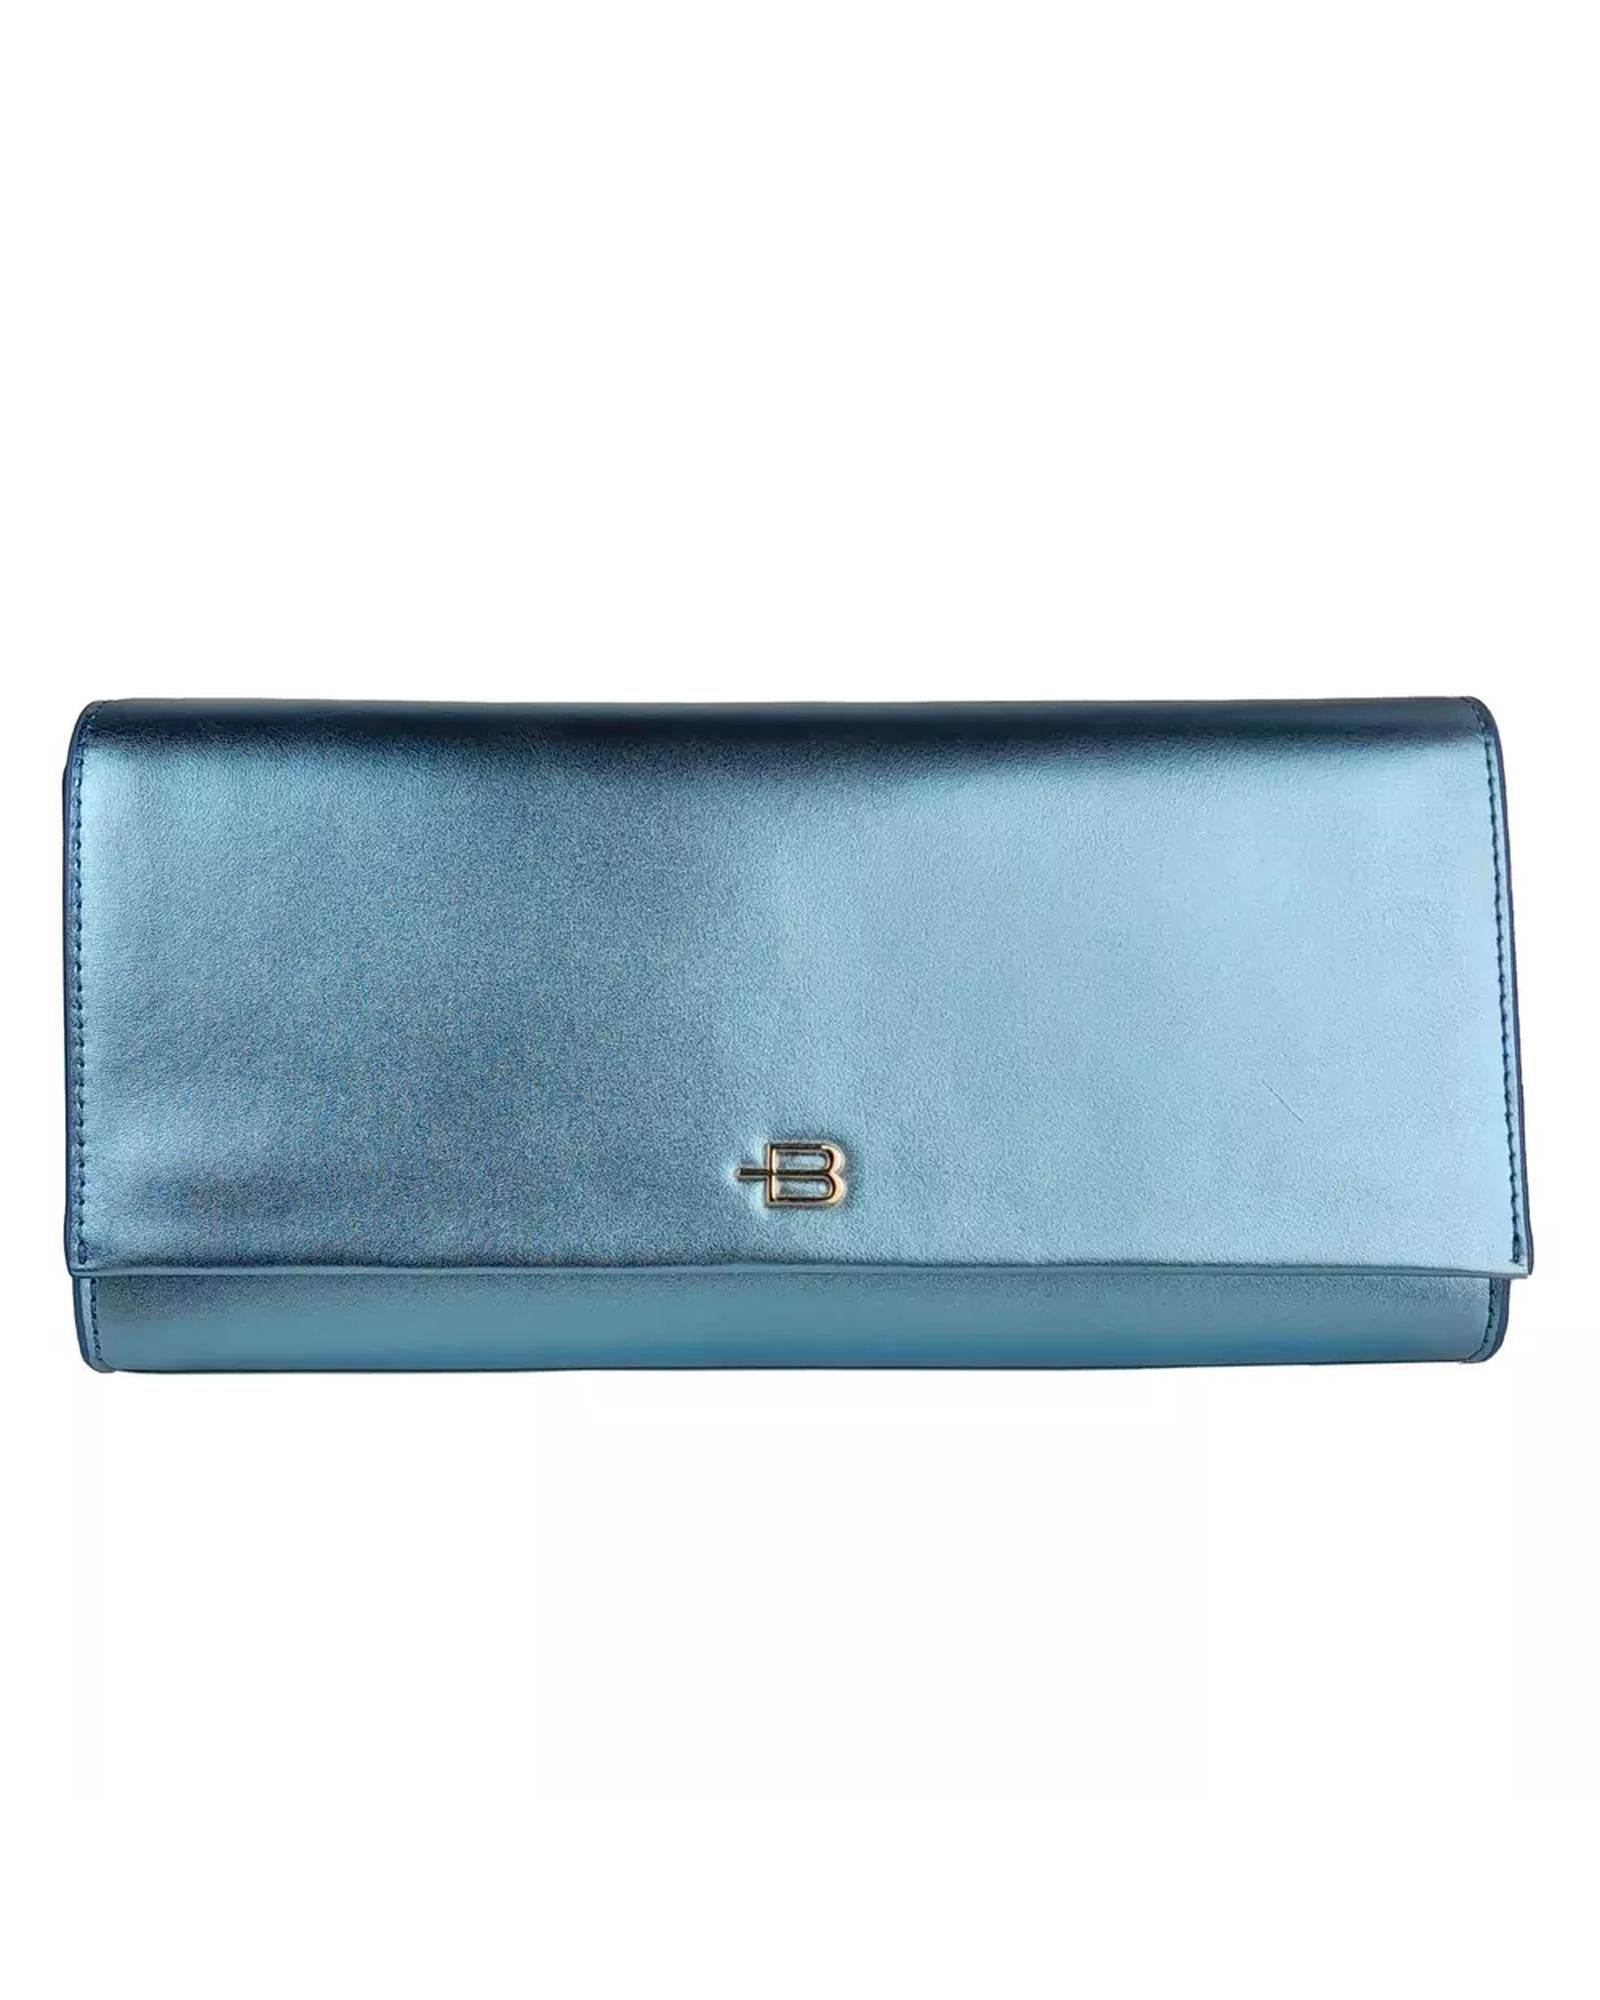 Baldinini Metallic Blue Calfskin Clutch Bag One Size Women